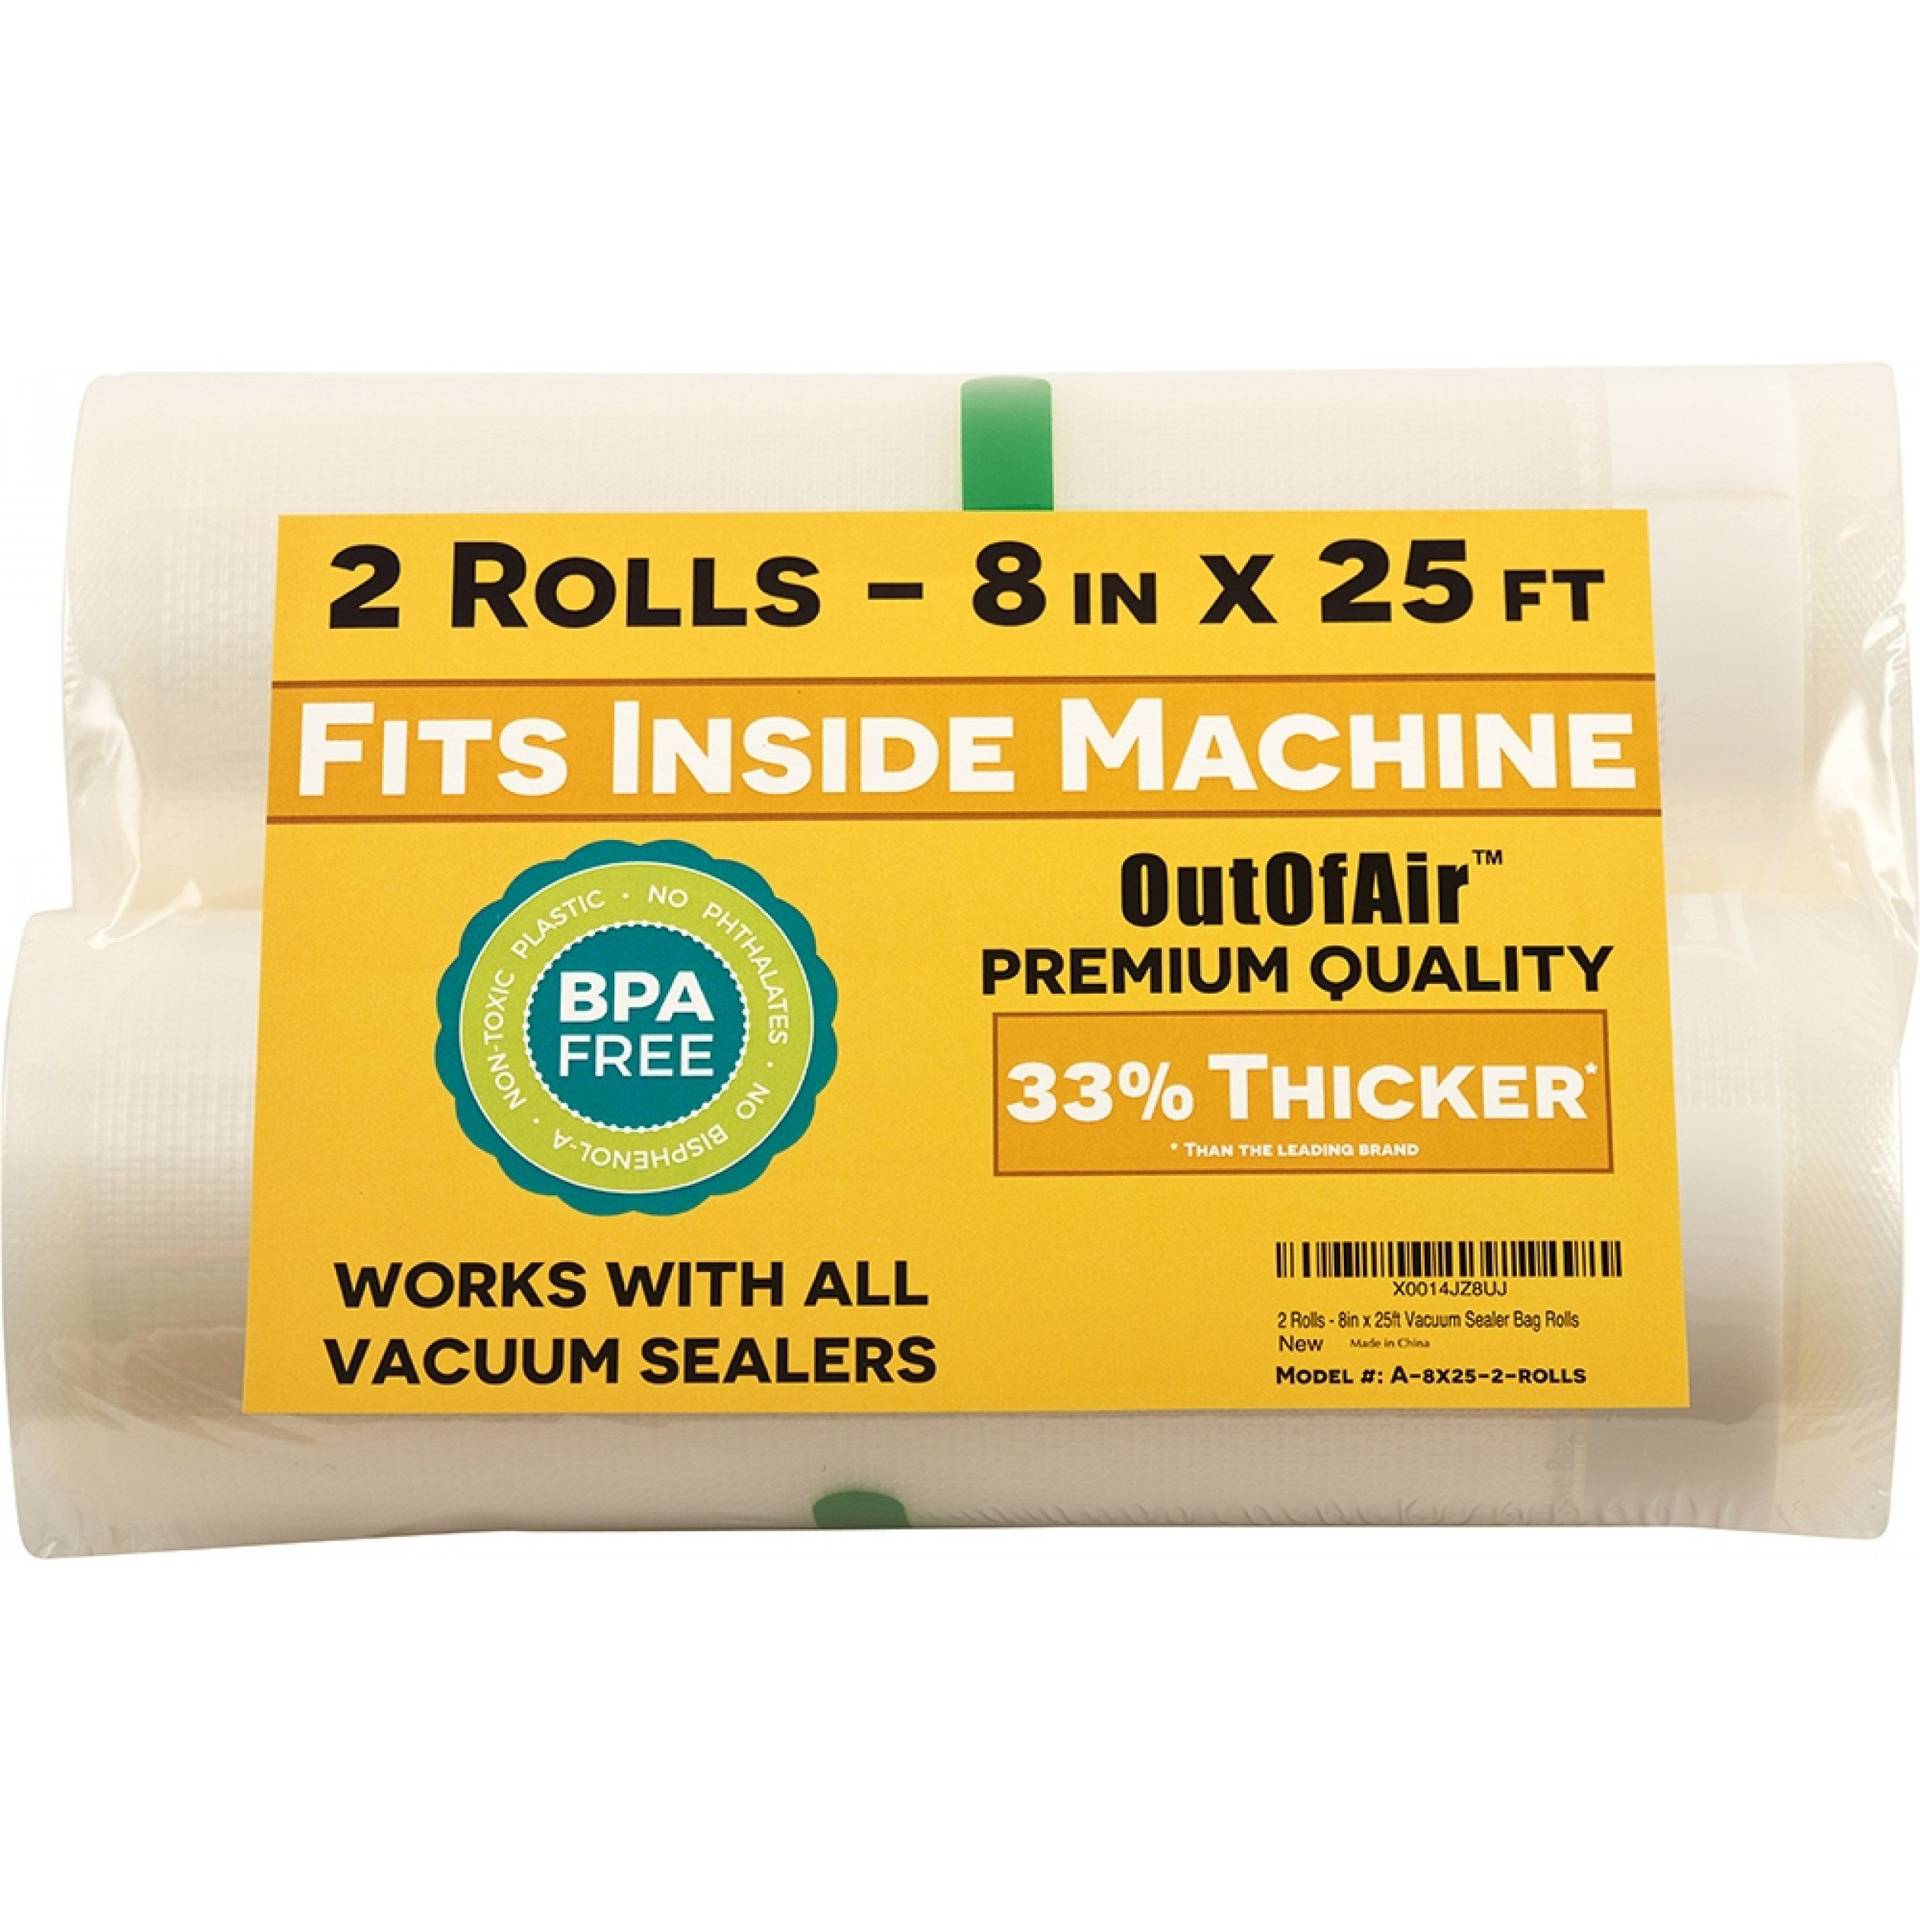 6 inch x 25' Rolls (Fits Inside Machine) - 4 Pack (100 Feet total) OutOfAir Pint Vacuum Sealer Rolls. Works with Foodsaver Vacuum Sealers. 33% Thicker